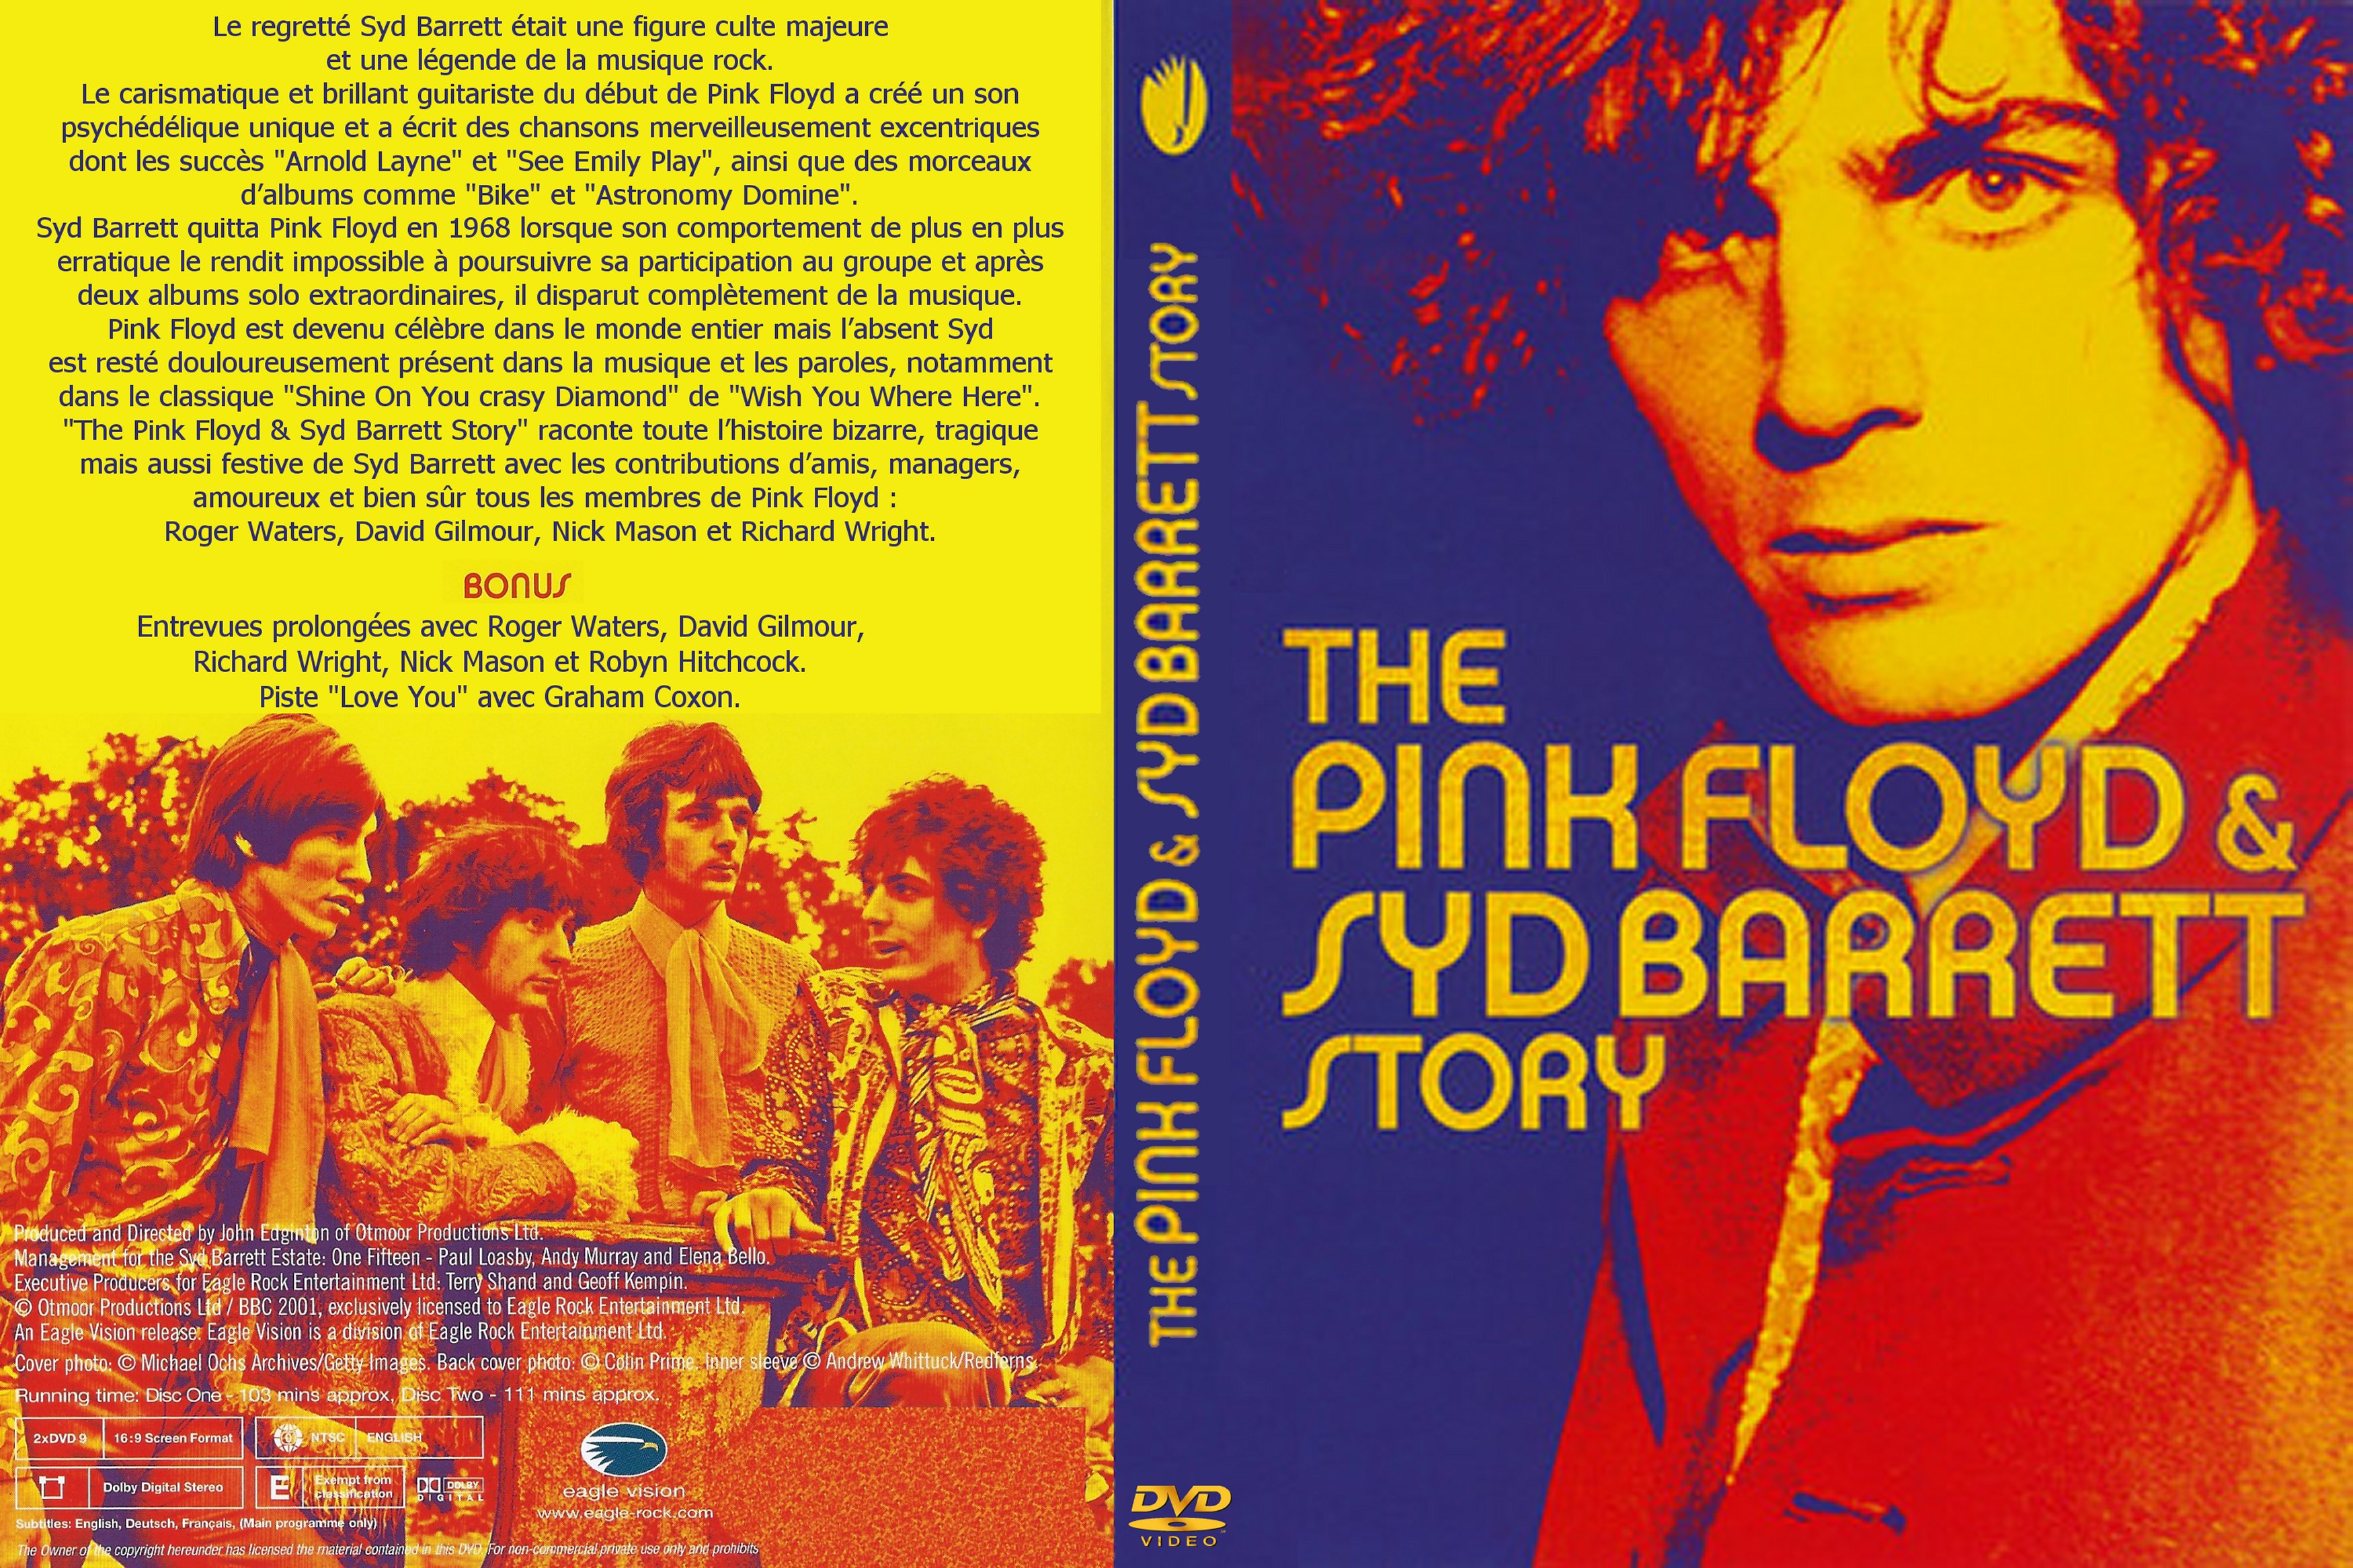 Jaquette DVD The Pink Floyd & Syd Barrett Story custom